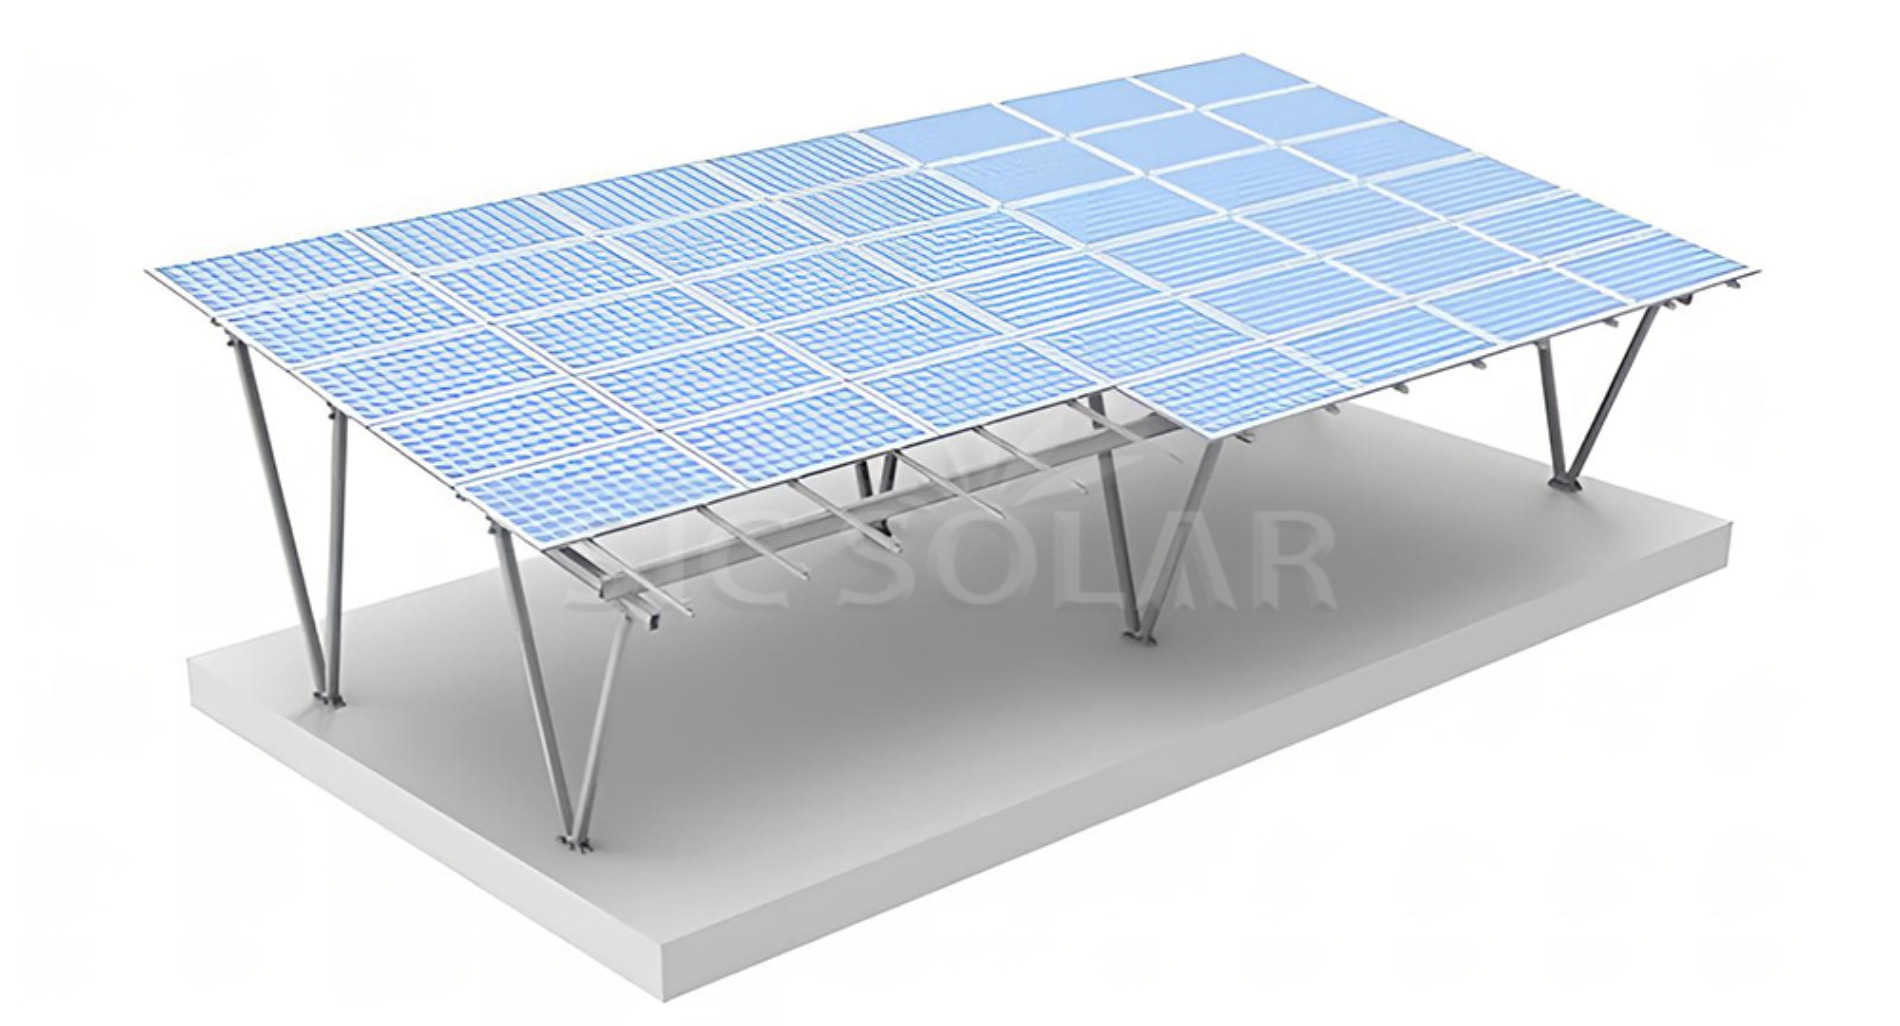 Solar carport structure